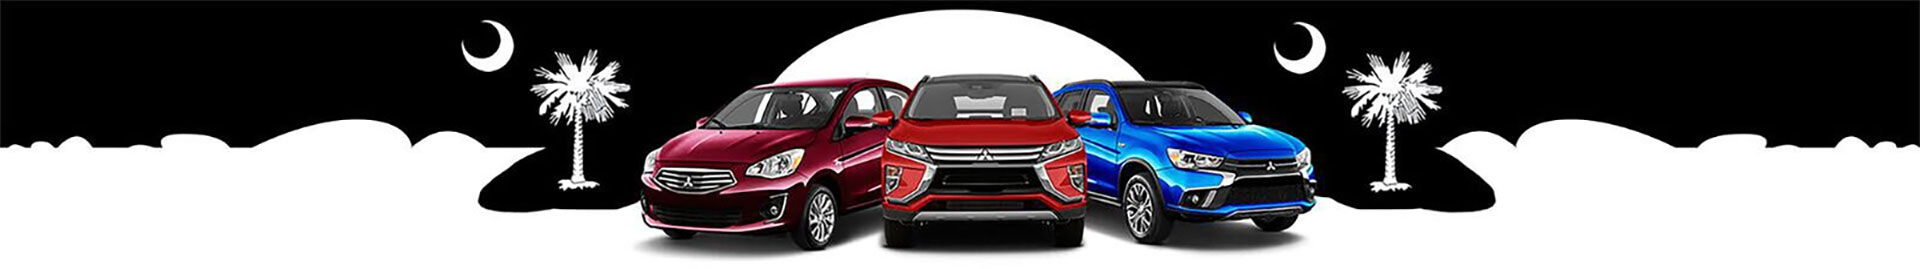 Mitsubishi lineup